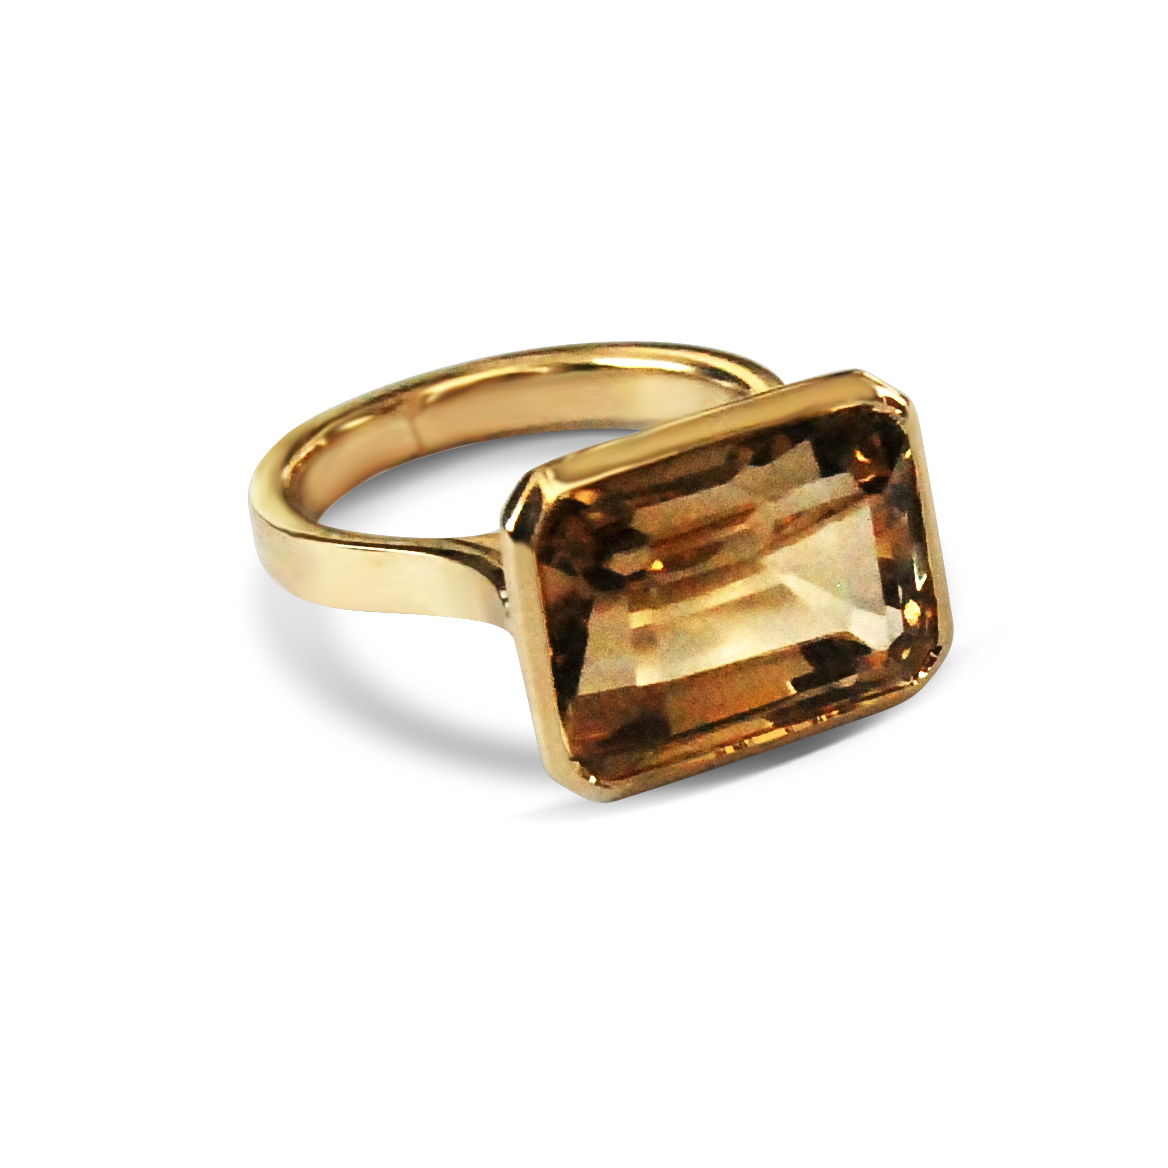 Smoky-quartz-and-yellow-gold-ring.jpg